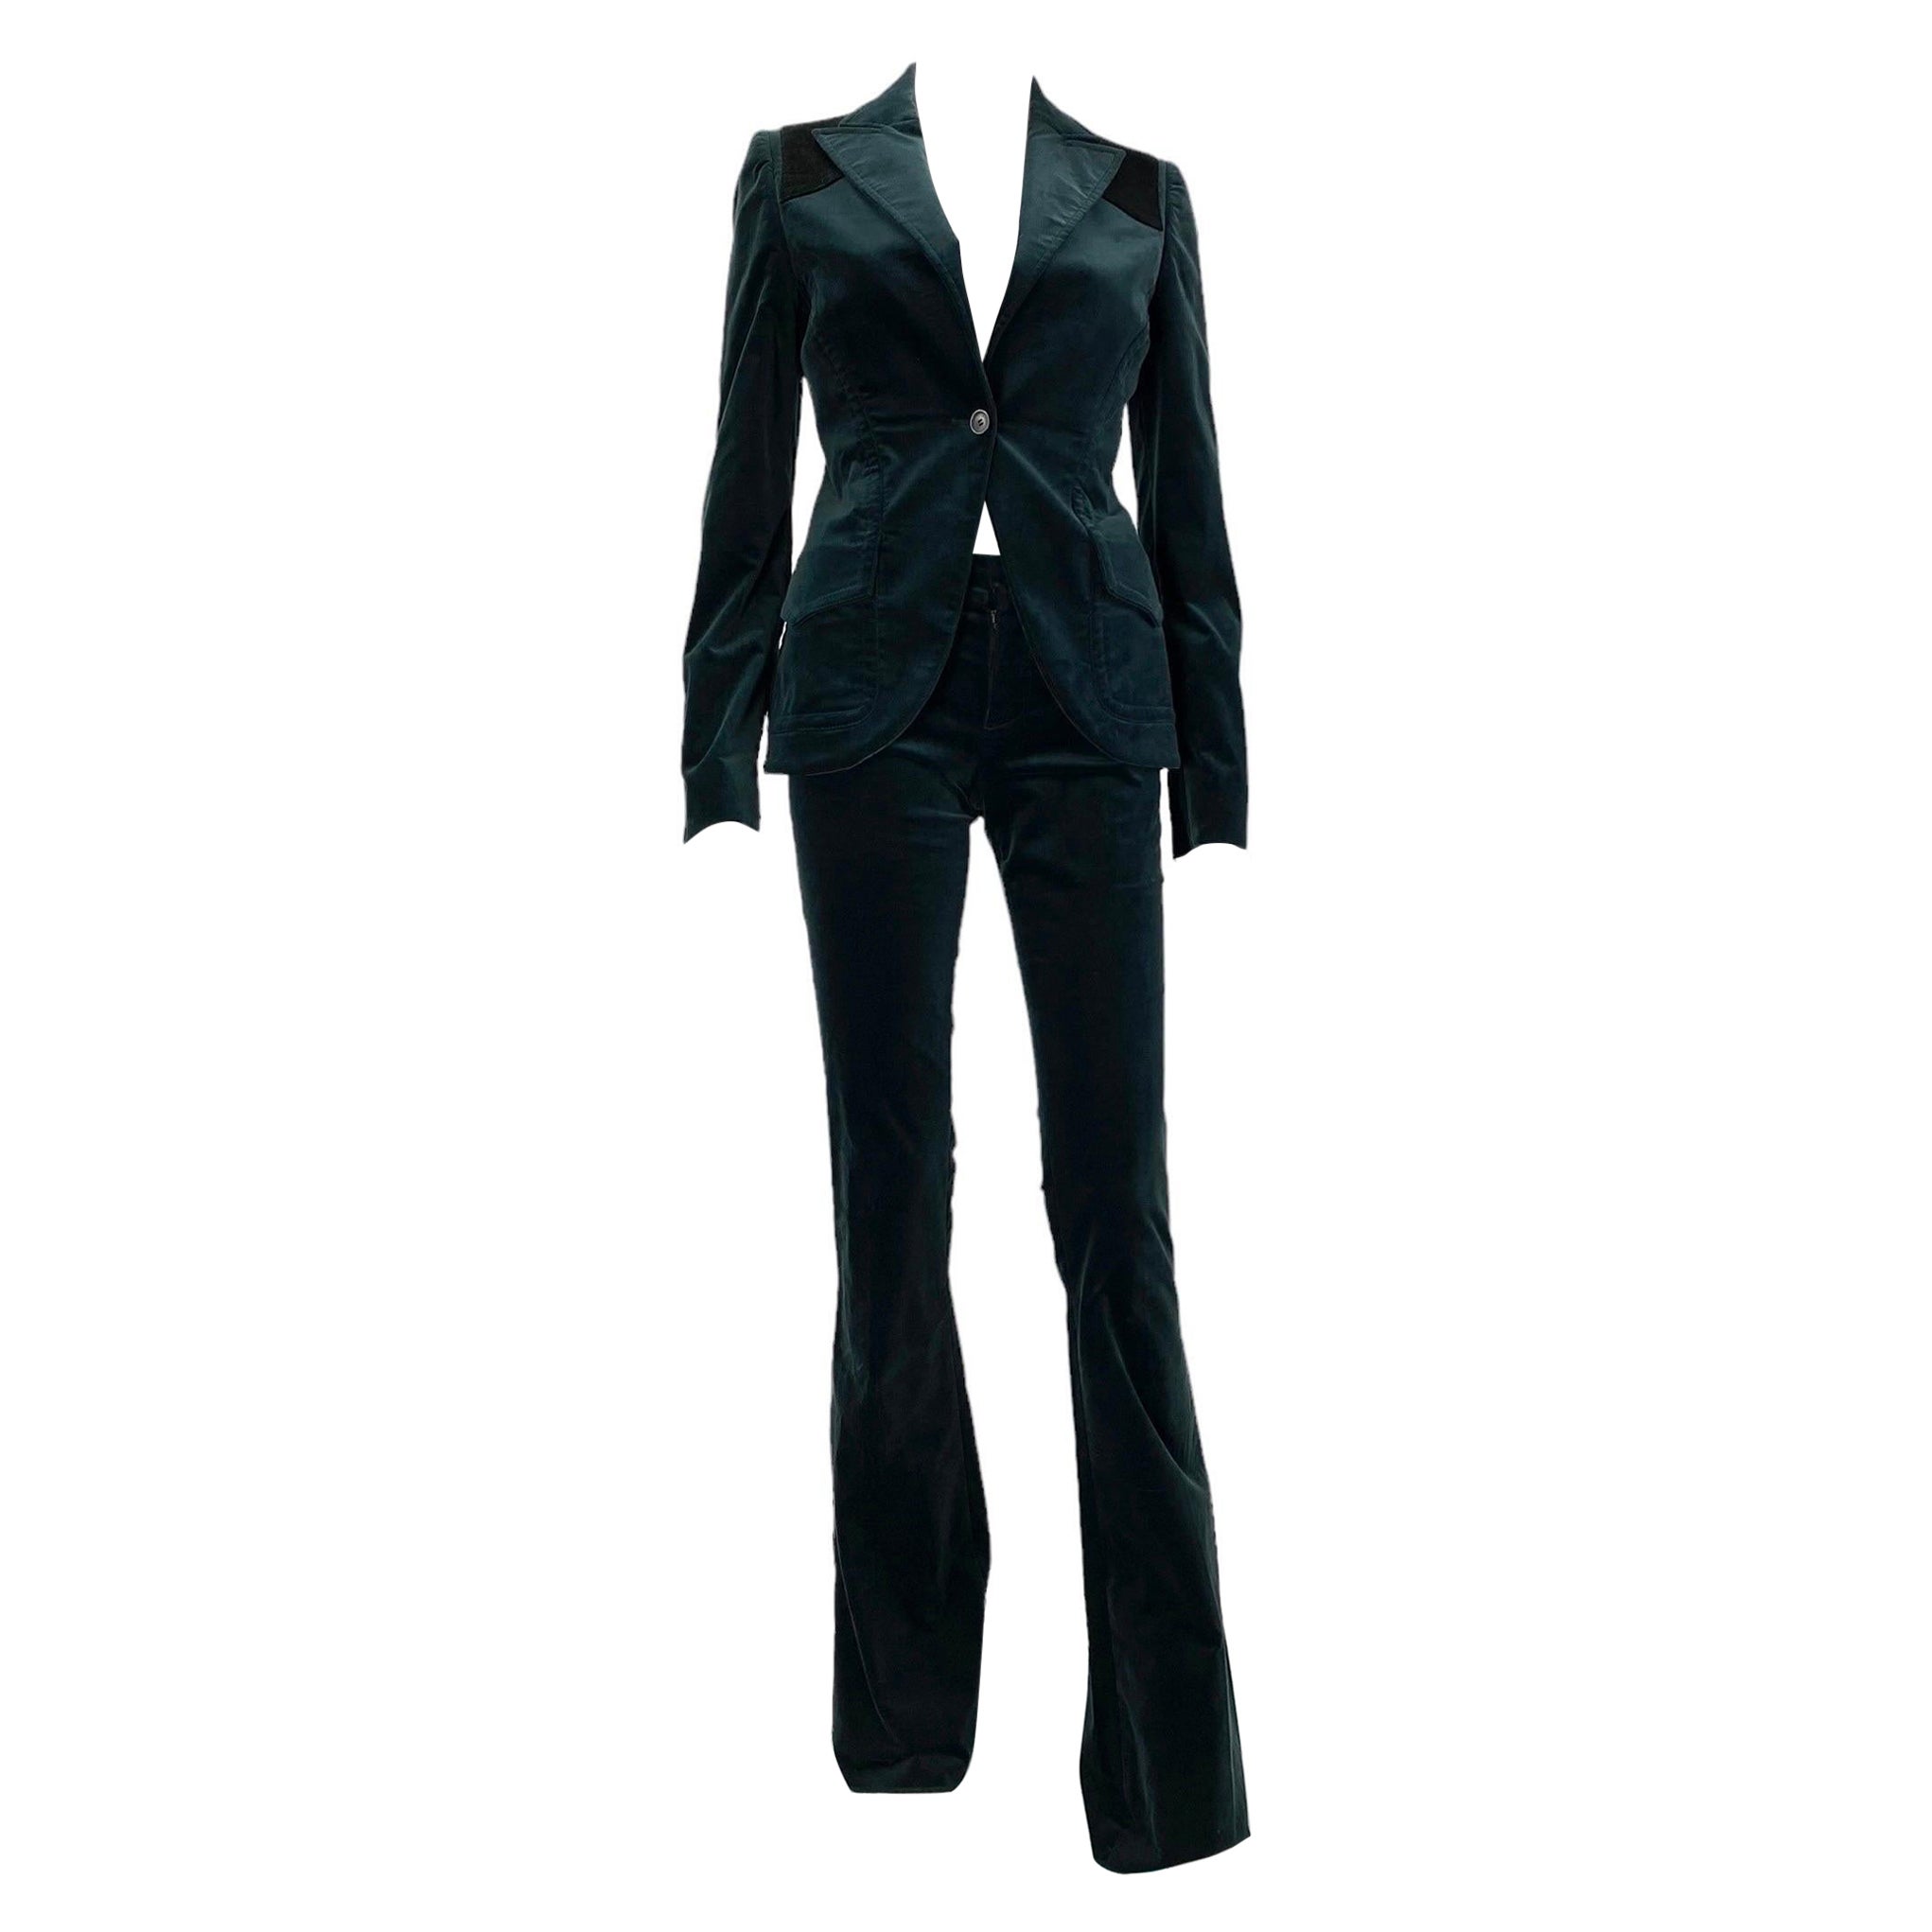 2005 Vintage Gucci Dark Green Velvet Pant Suit 38 - 2 For Sale